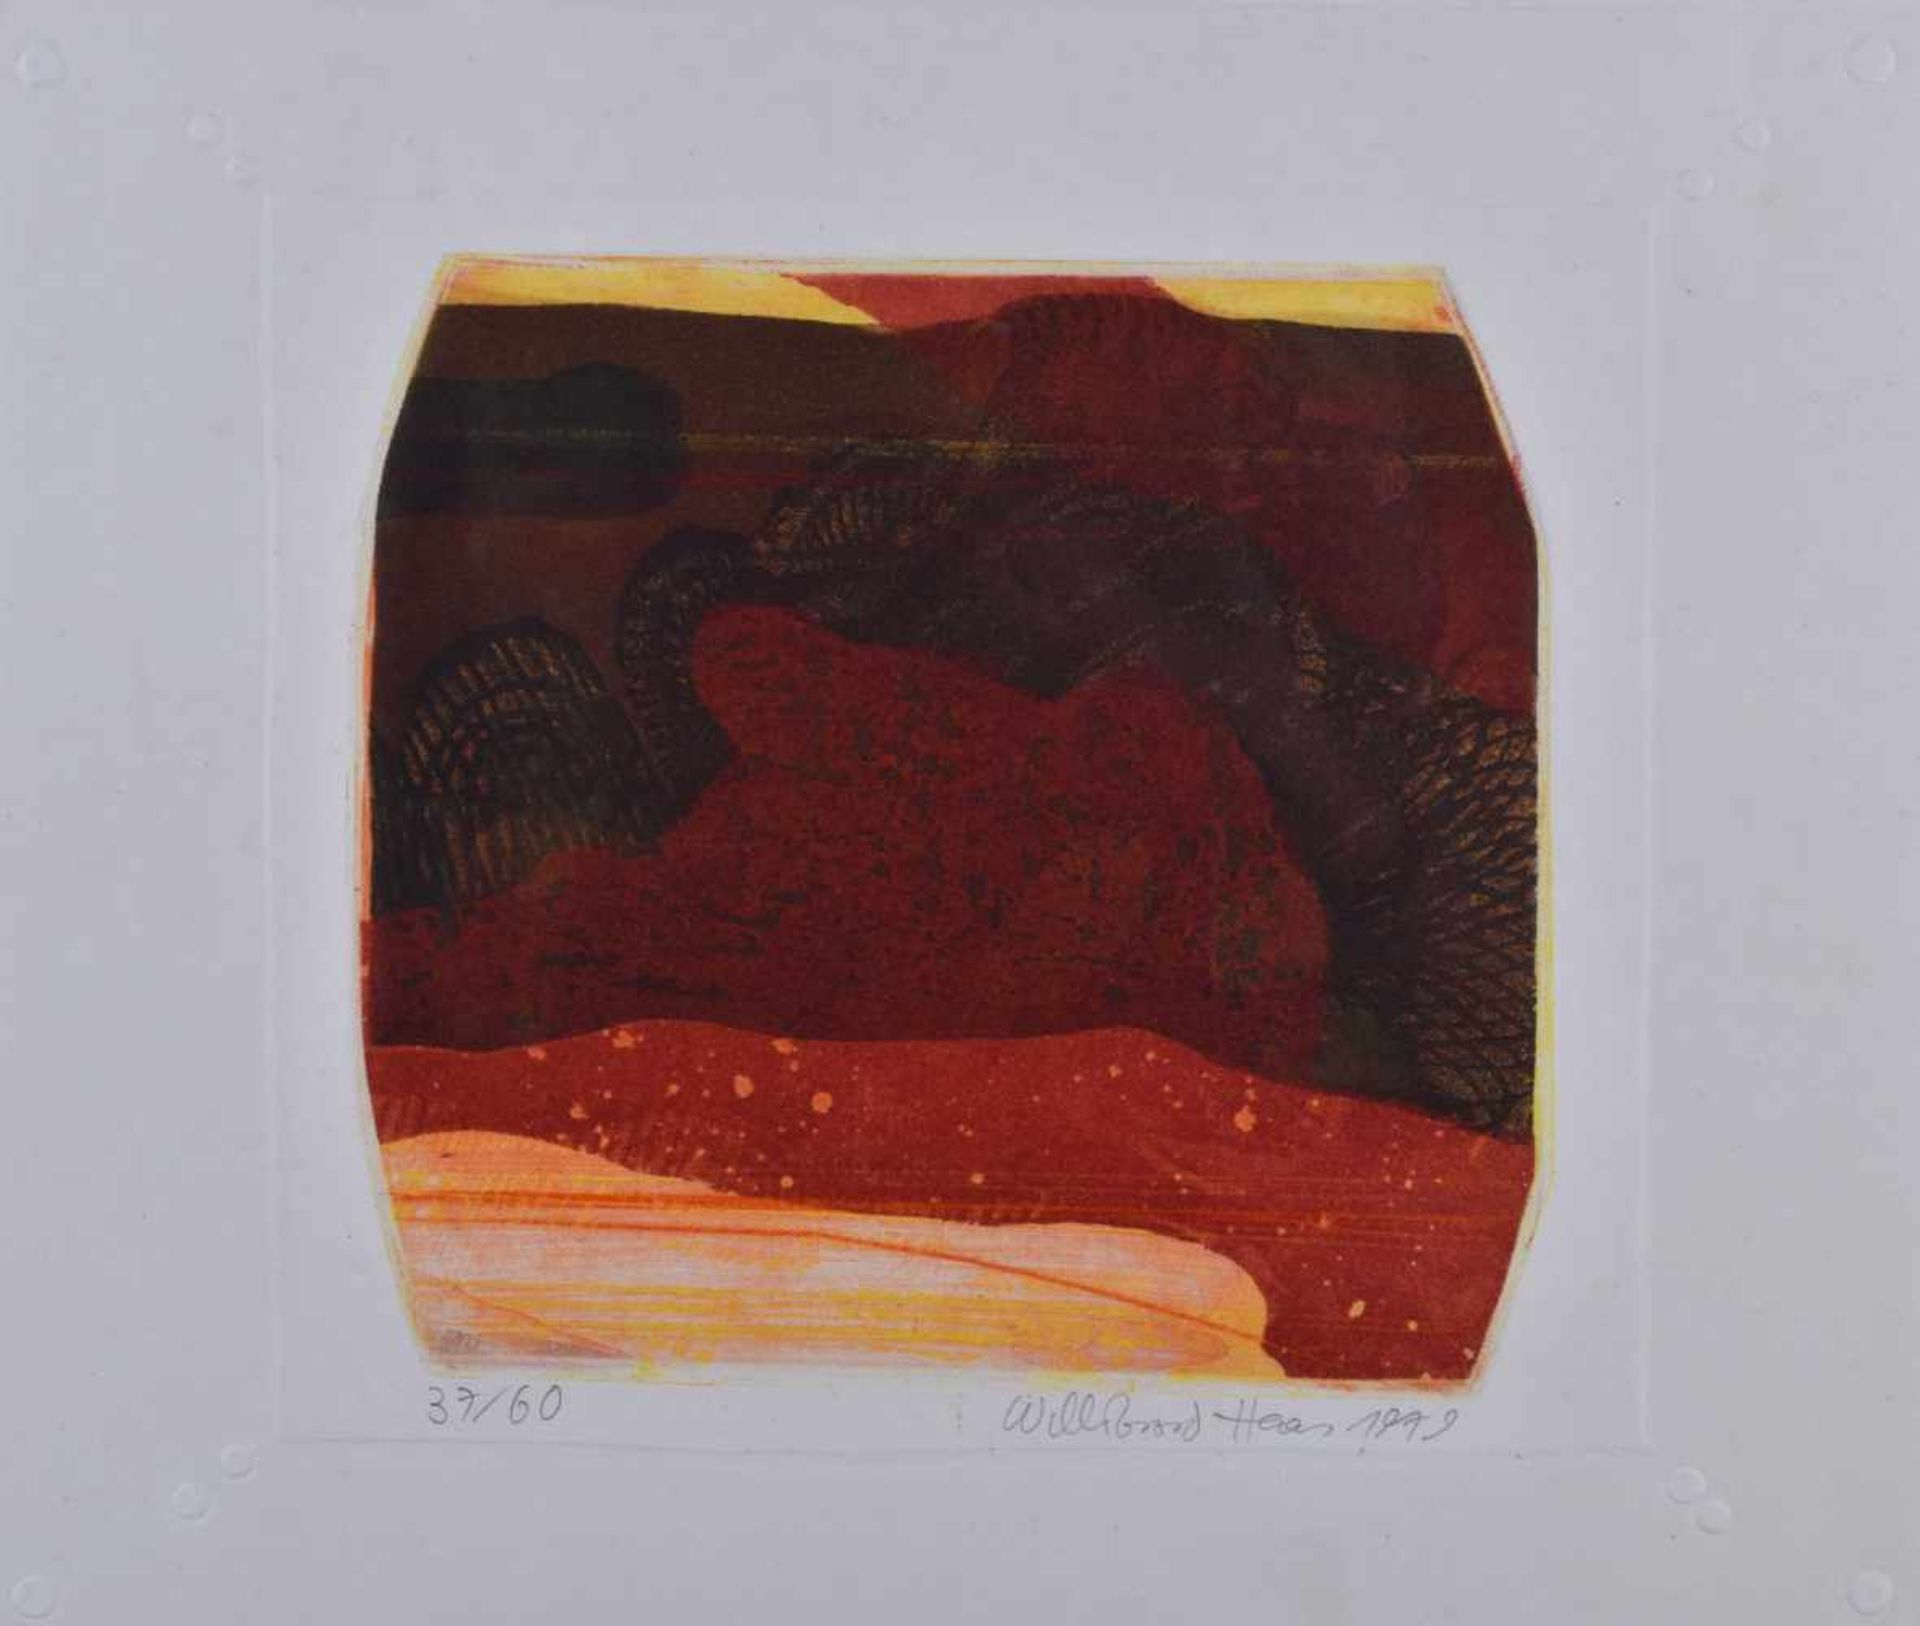 Willibrord HAAS (1936)"Sepia moiree"Grafik-Farbaquatintaradierung, Blattgröße: 38,5 cm x 48,5 cm, - Bild 2 aus 3